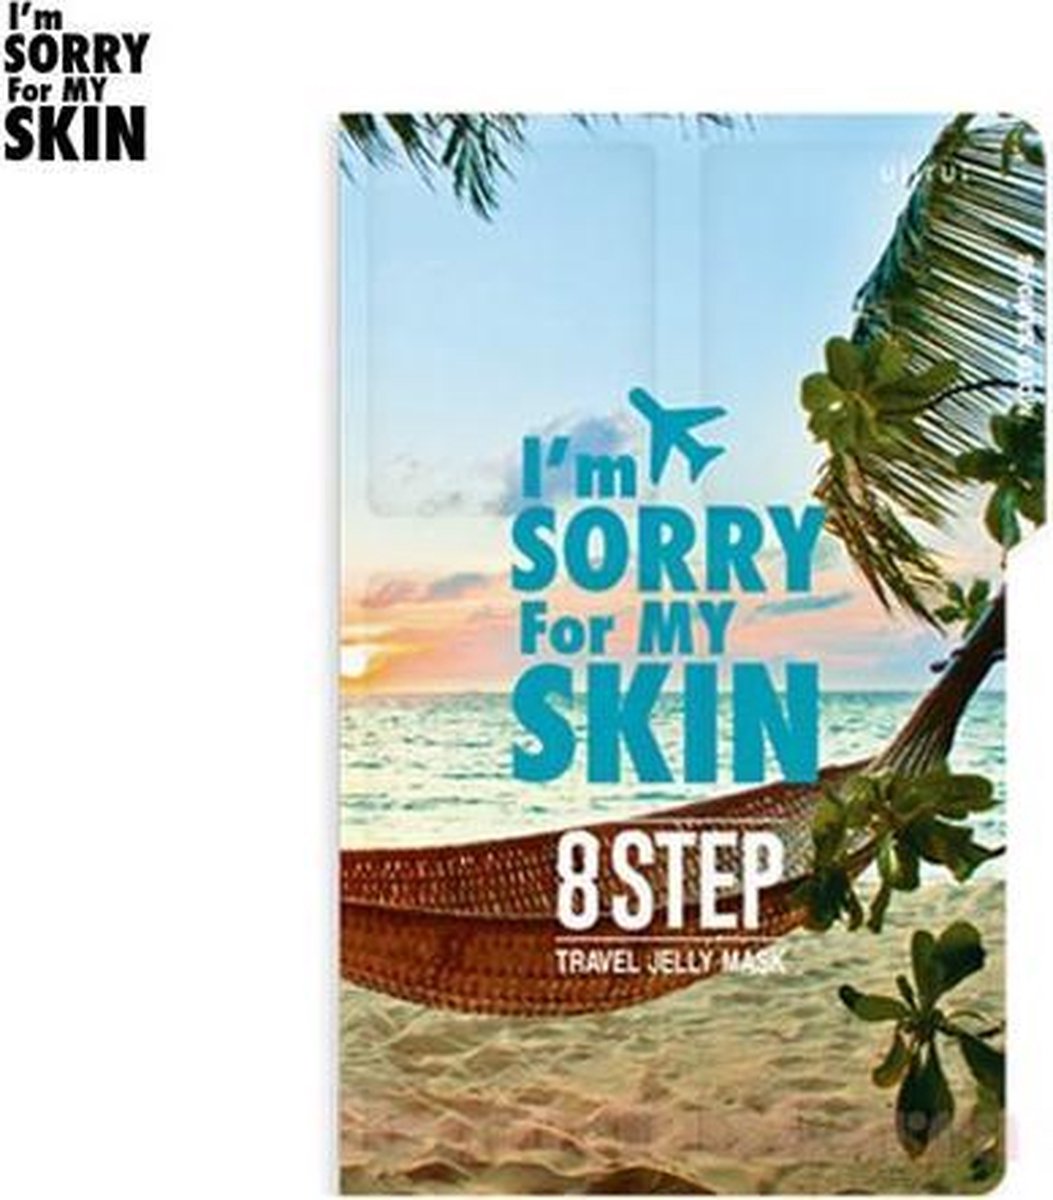 Koreaanse skincare Travel Pack - I'm Sorry For My Skin 8 Step Travel Jelly Mask - Van cleansing tot Shampoo